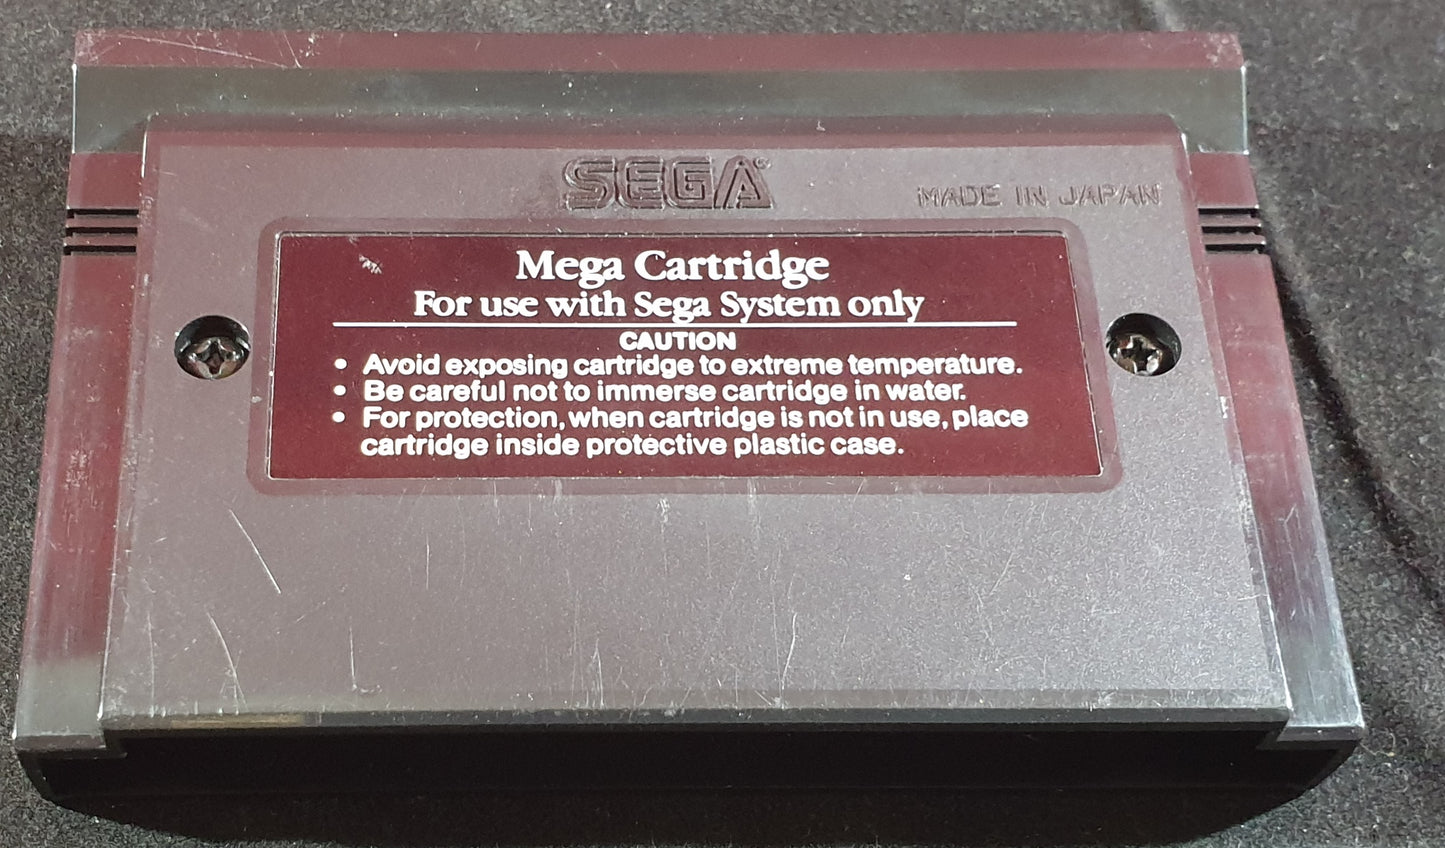 Zillion II Triformation Cartridge Only Sega Master System Game